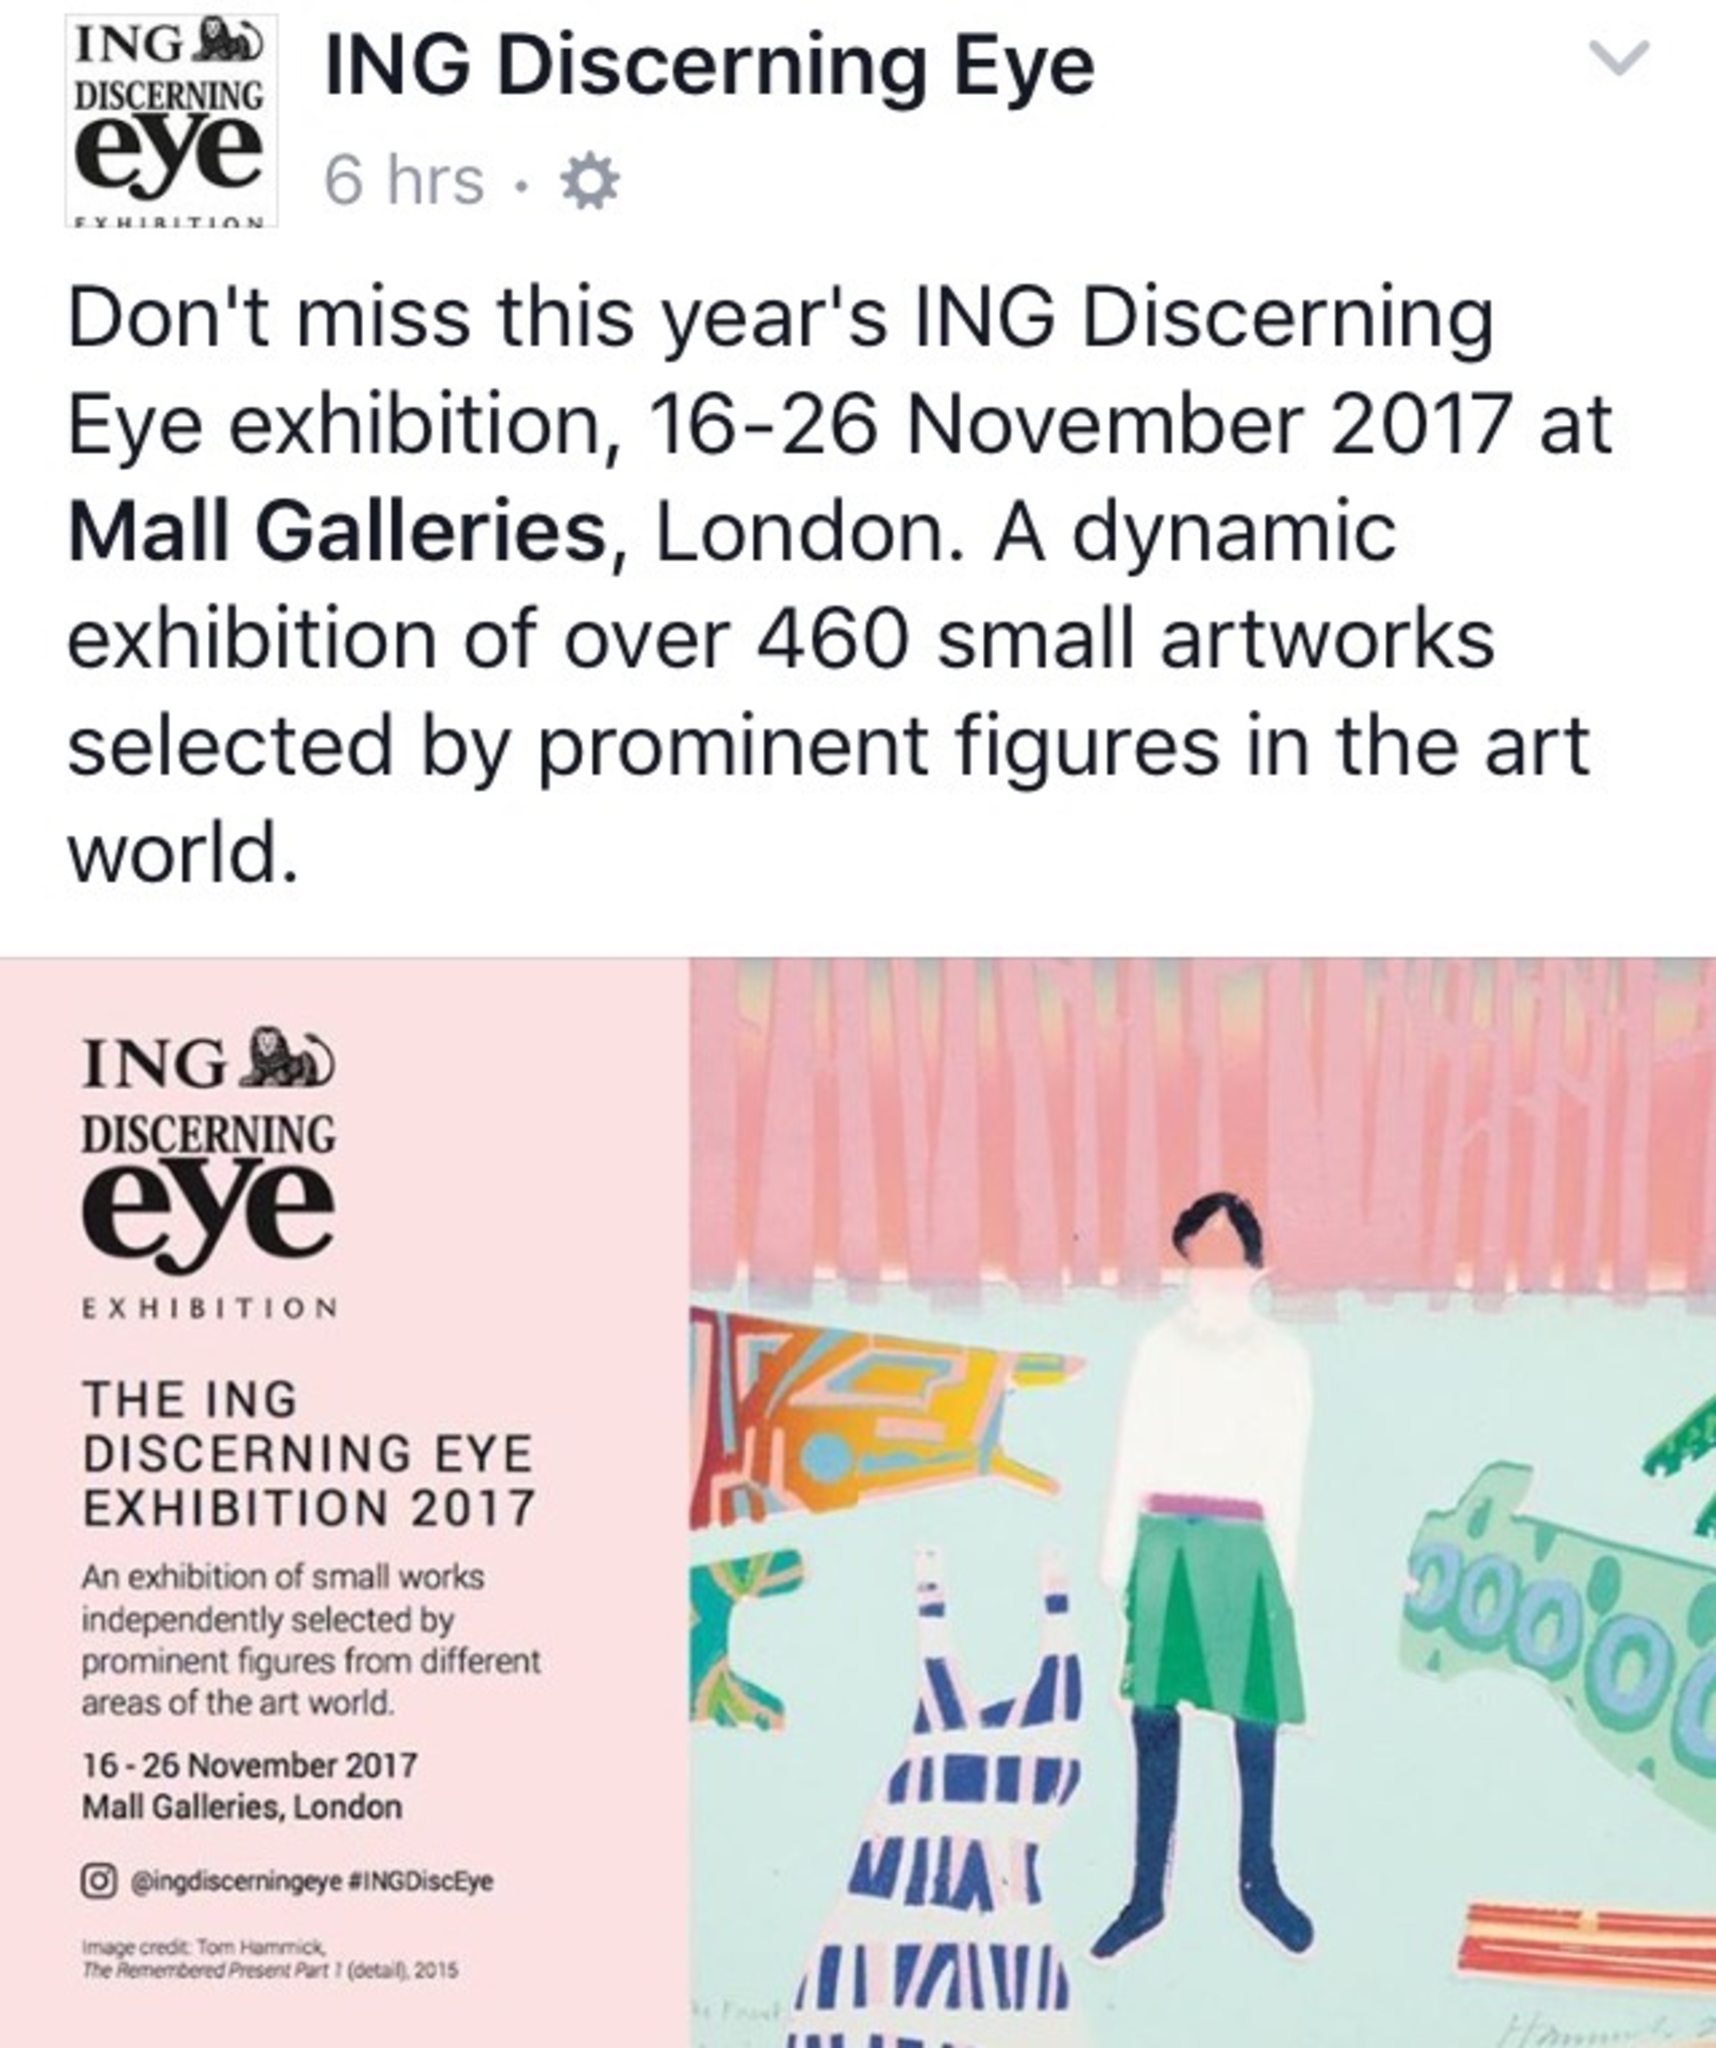 ING Discerning Eye Exhibition